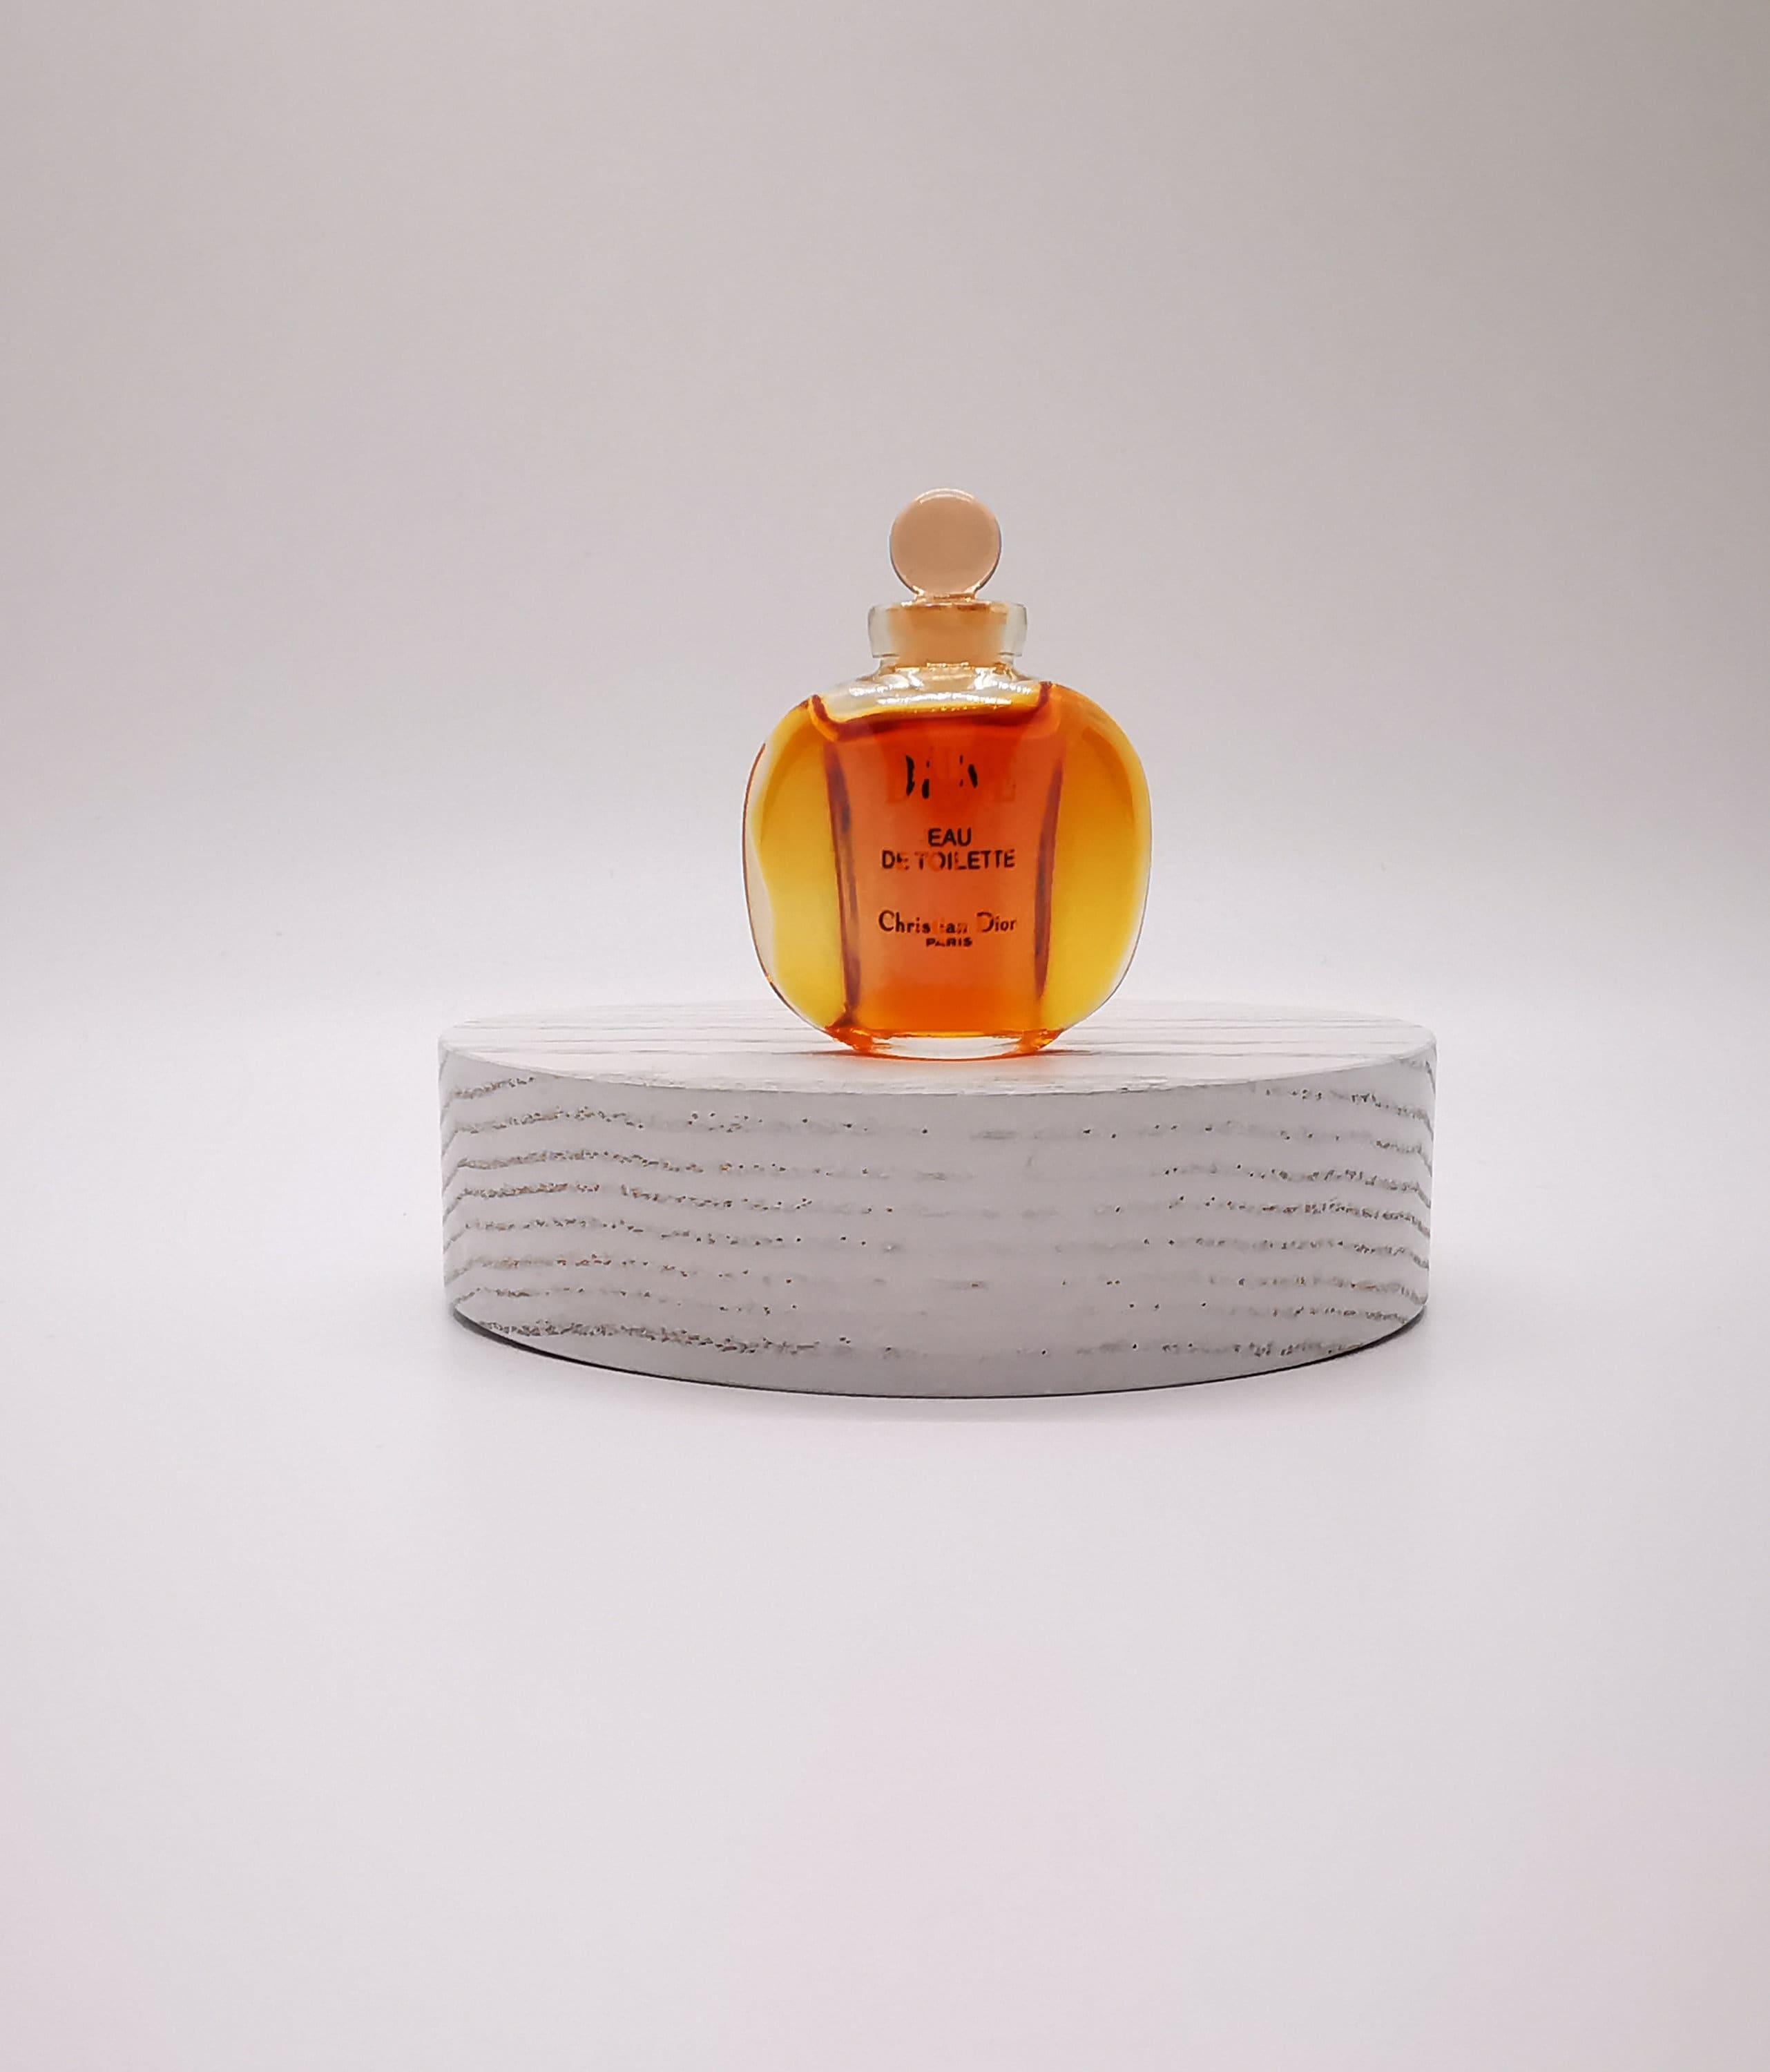 Louis Vuitton EMPTY BOTTLE with box CALIFORNIA DREAM 200ml 6.8OZ